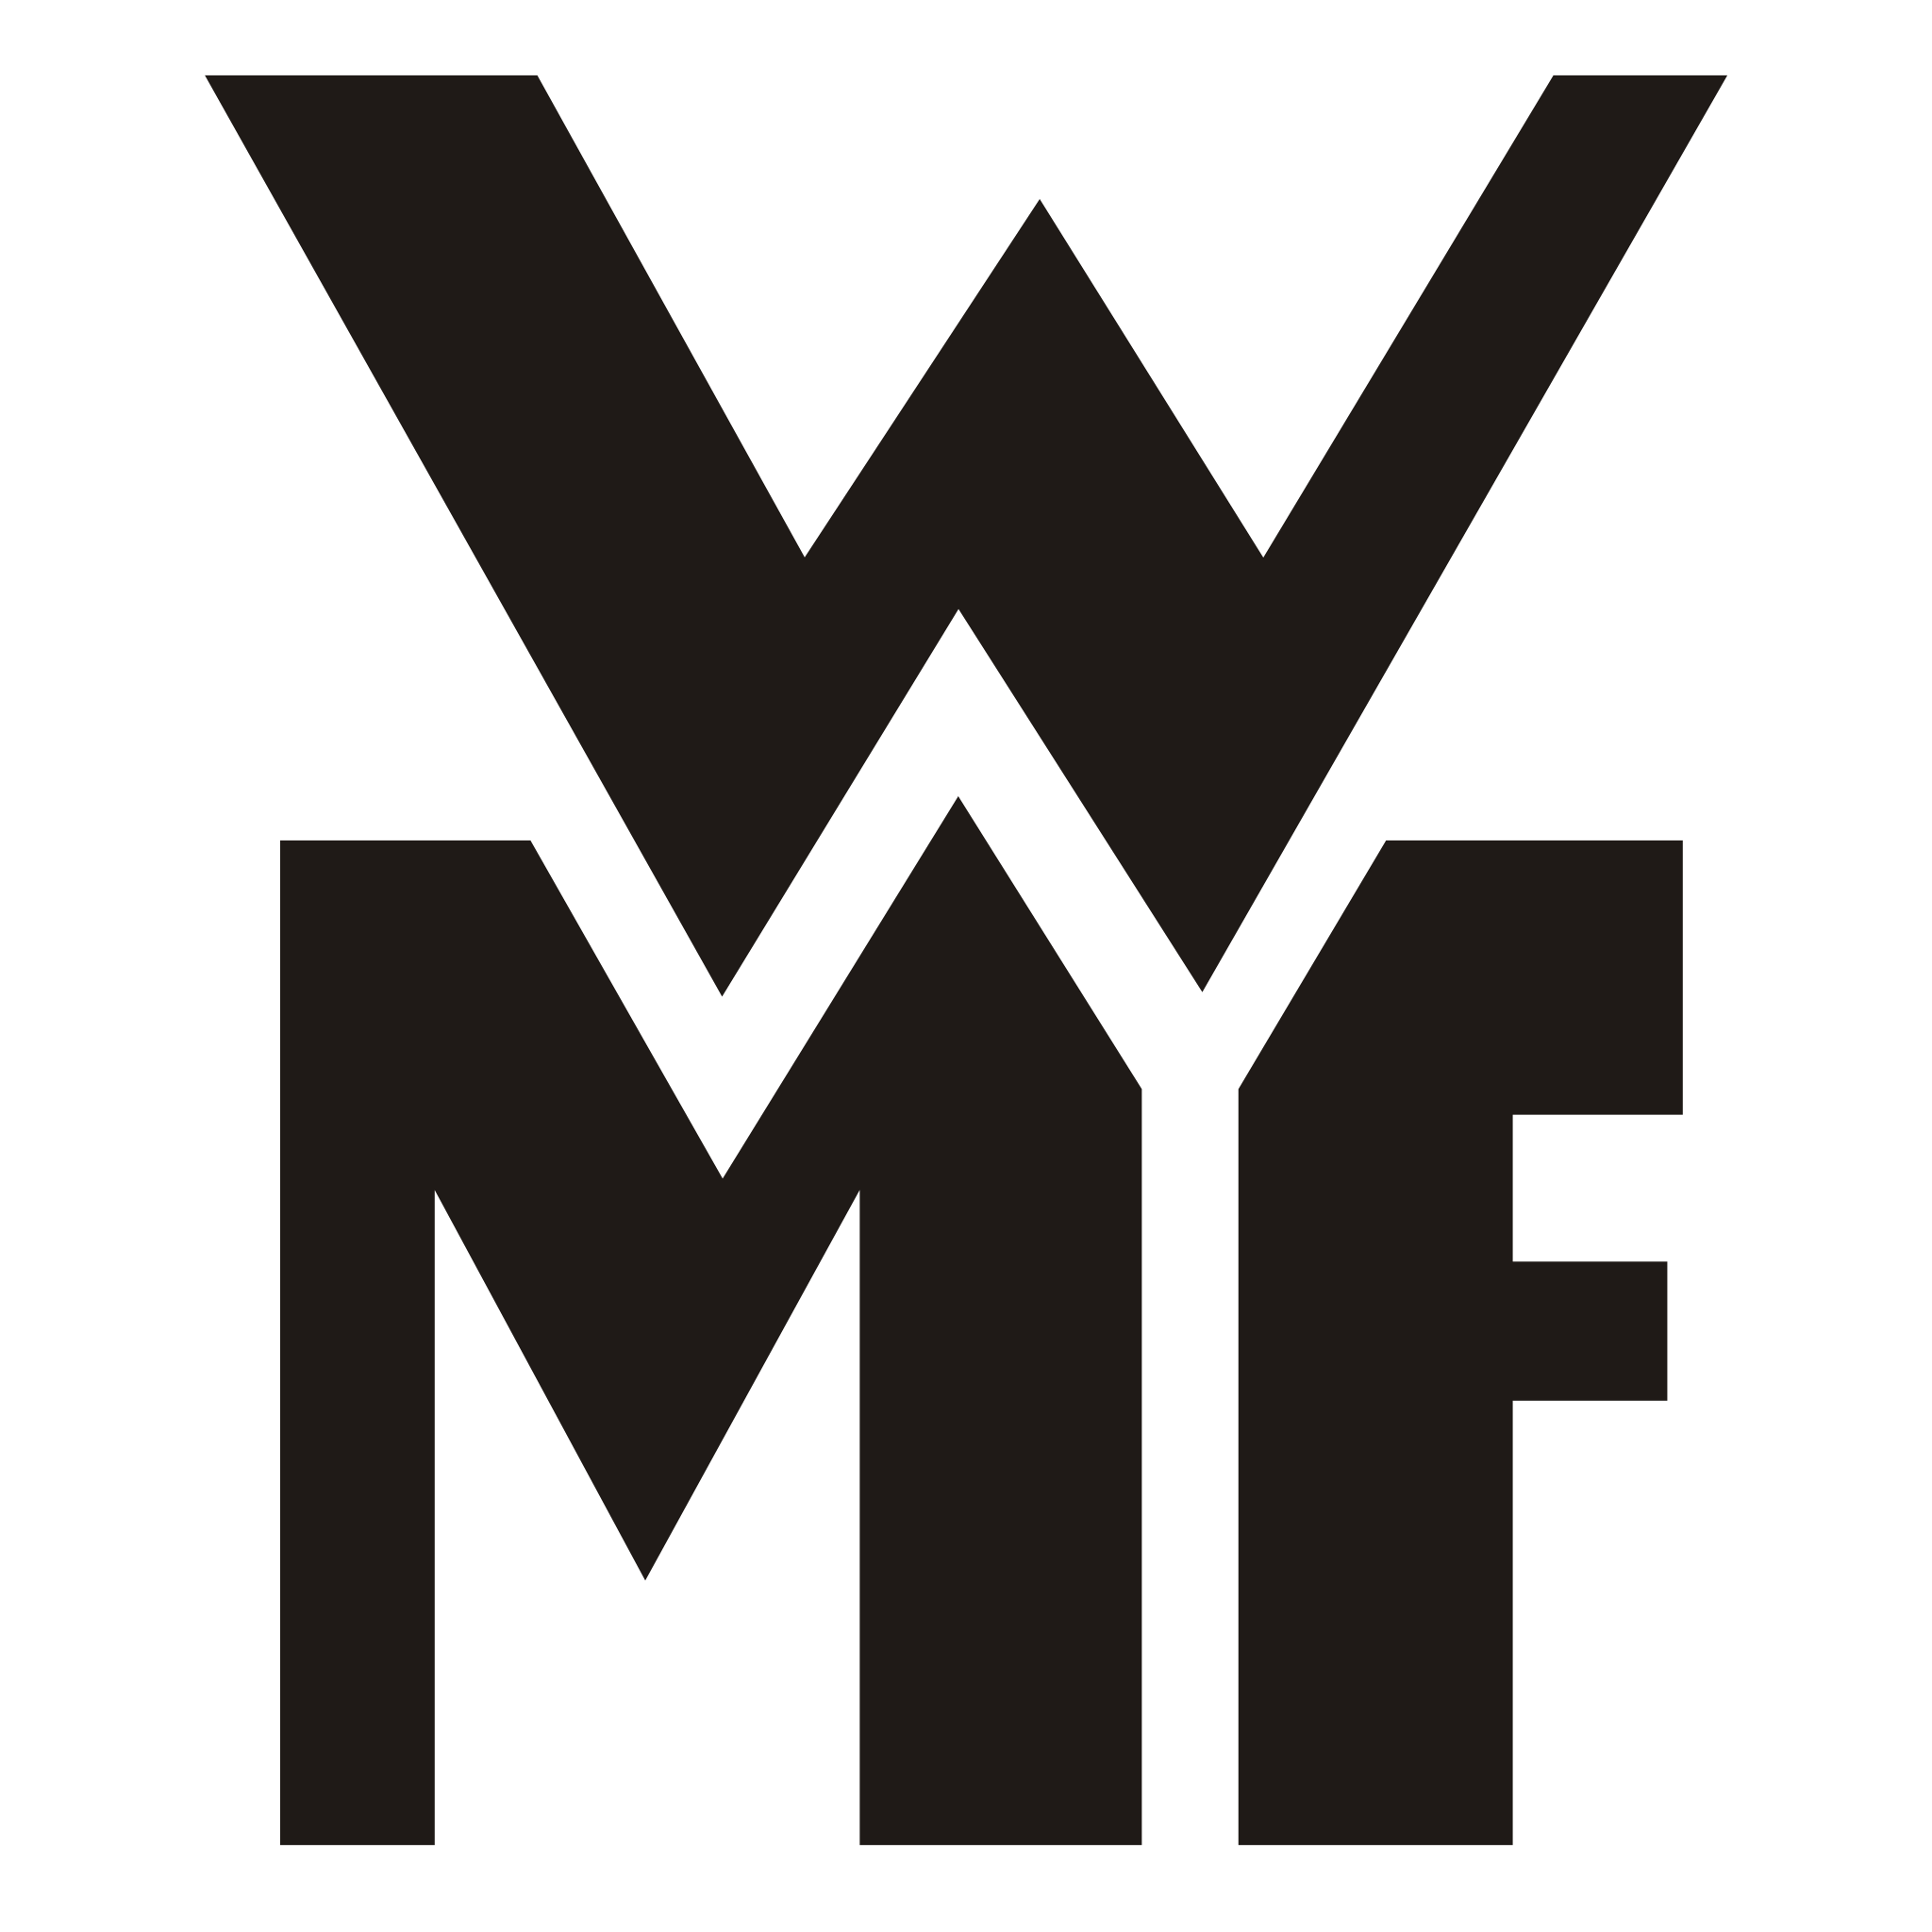 The WMF logo.